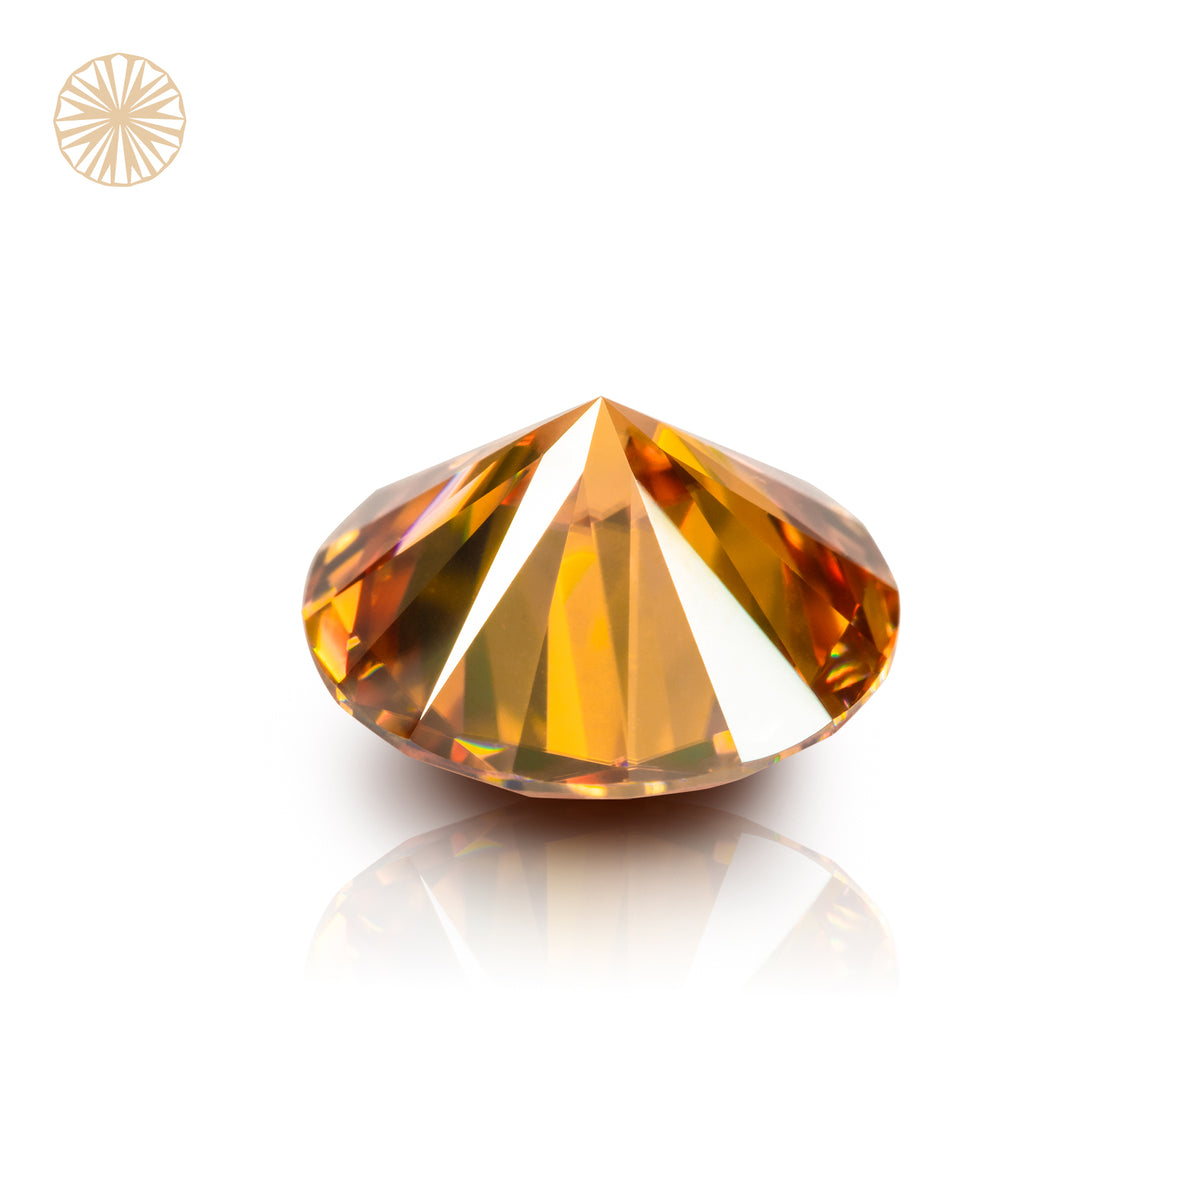 Orange Brilliant Cut Round Shape Moissanite Diamond Loose Gemstones GRA Certified Vivid Orange VVS1 Moissanite Fancy Cut for Jewelry Making